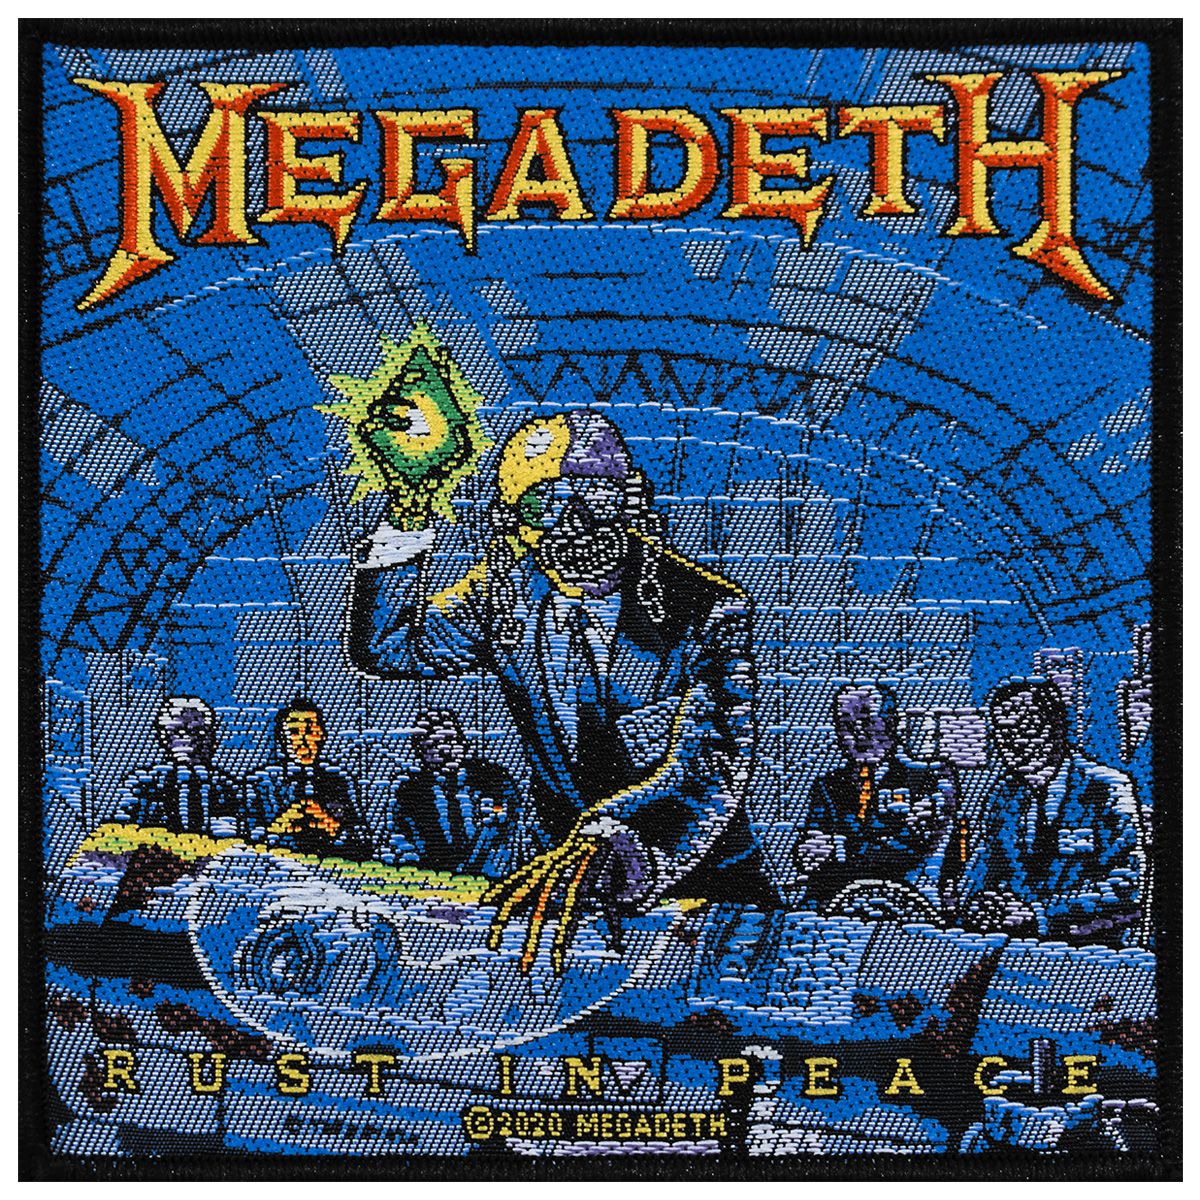 Megadeth rust in peace polaris текст фото 65